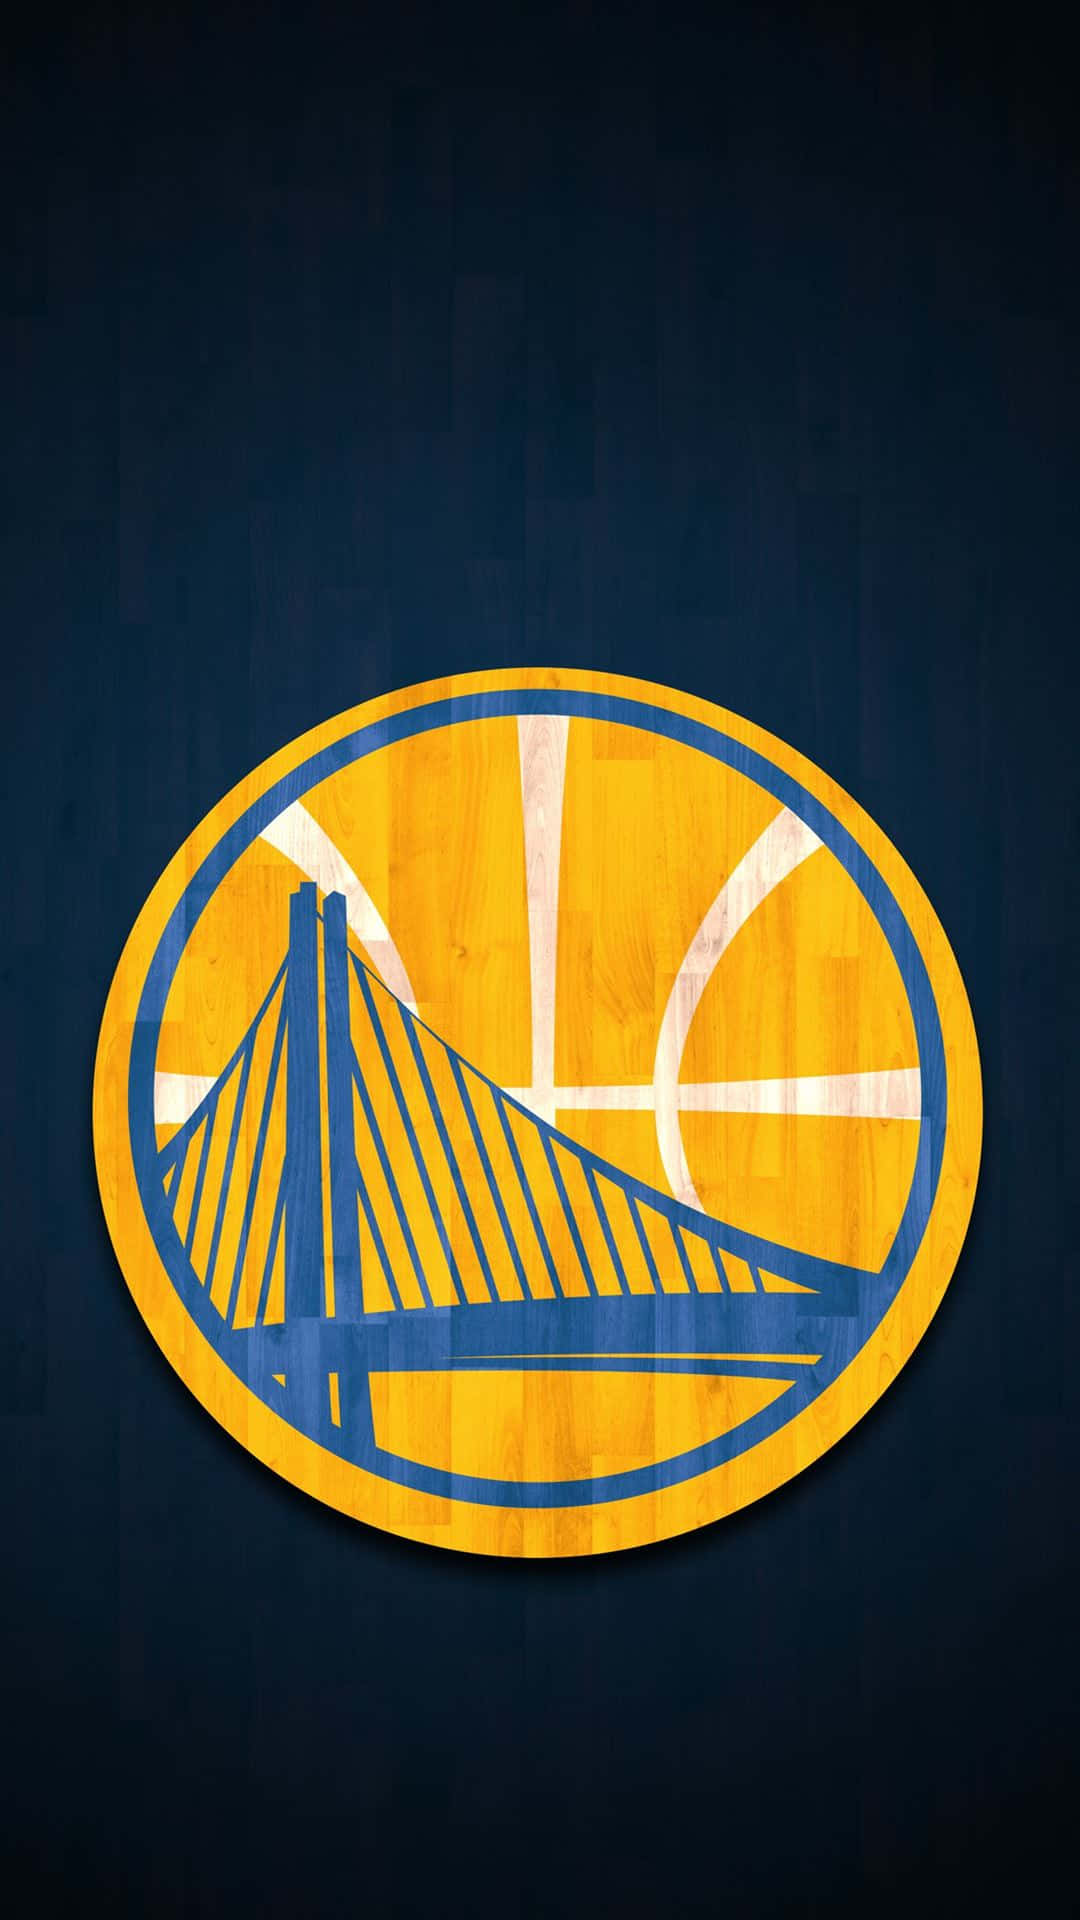 Golden State Warriors Logo With Basketball Design Wallpaper